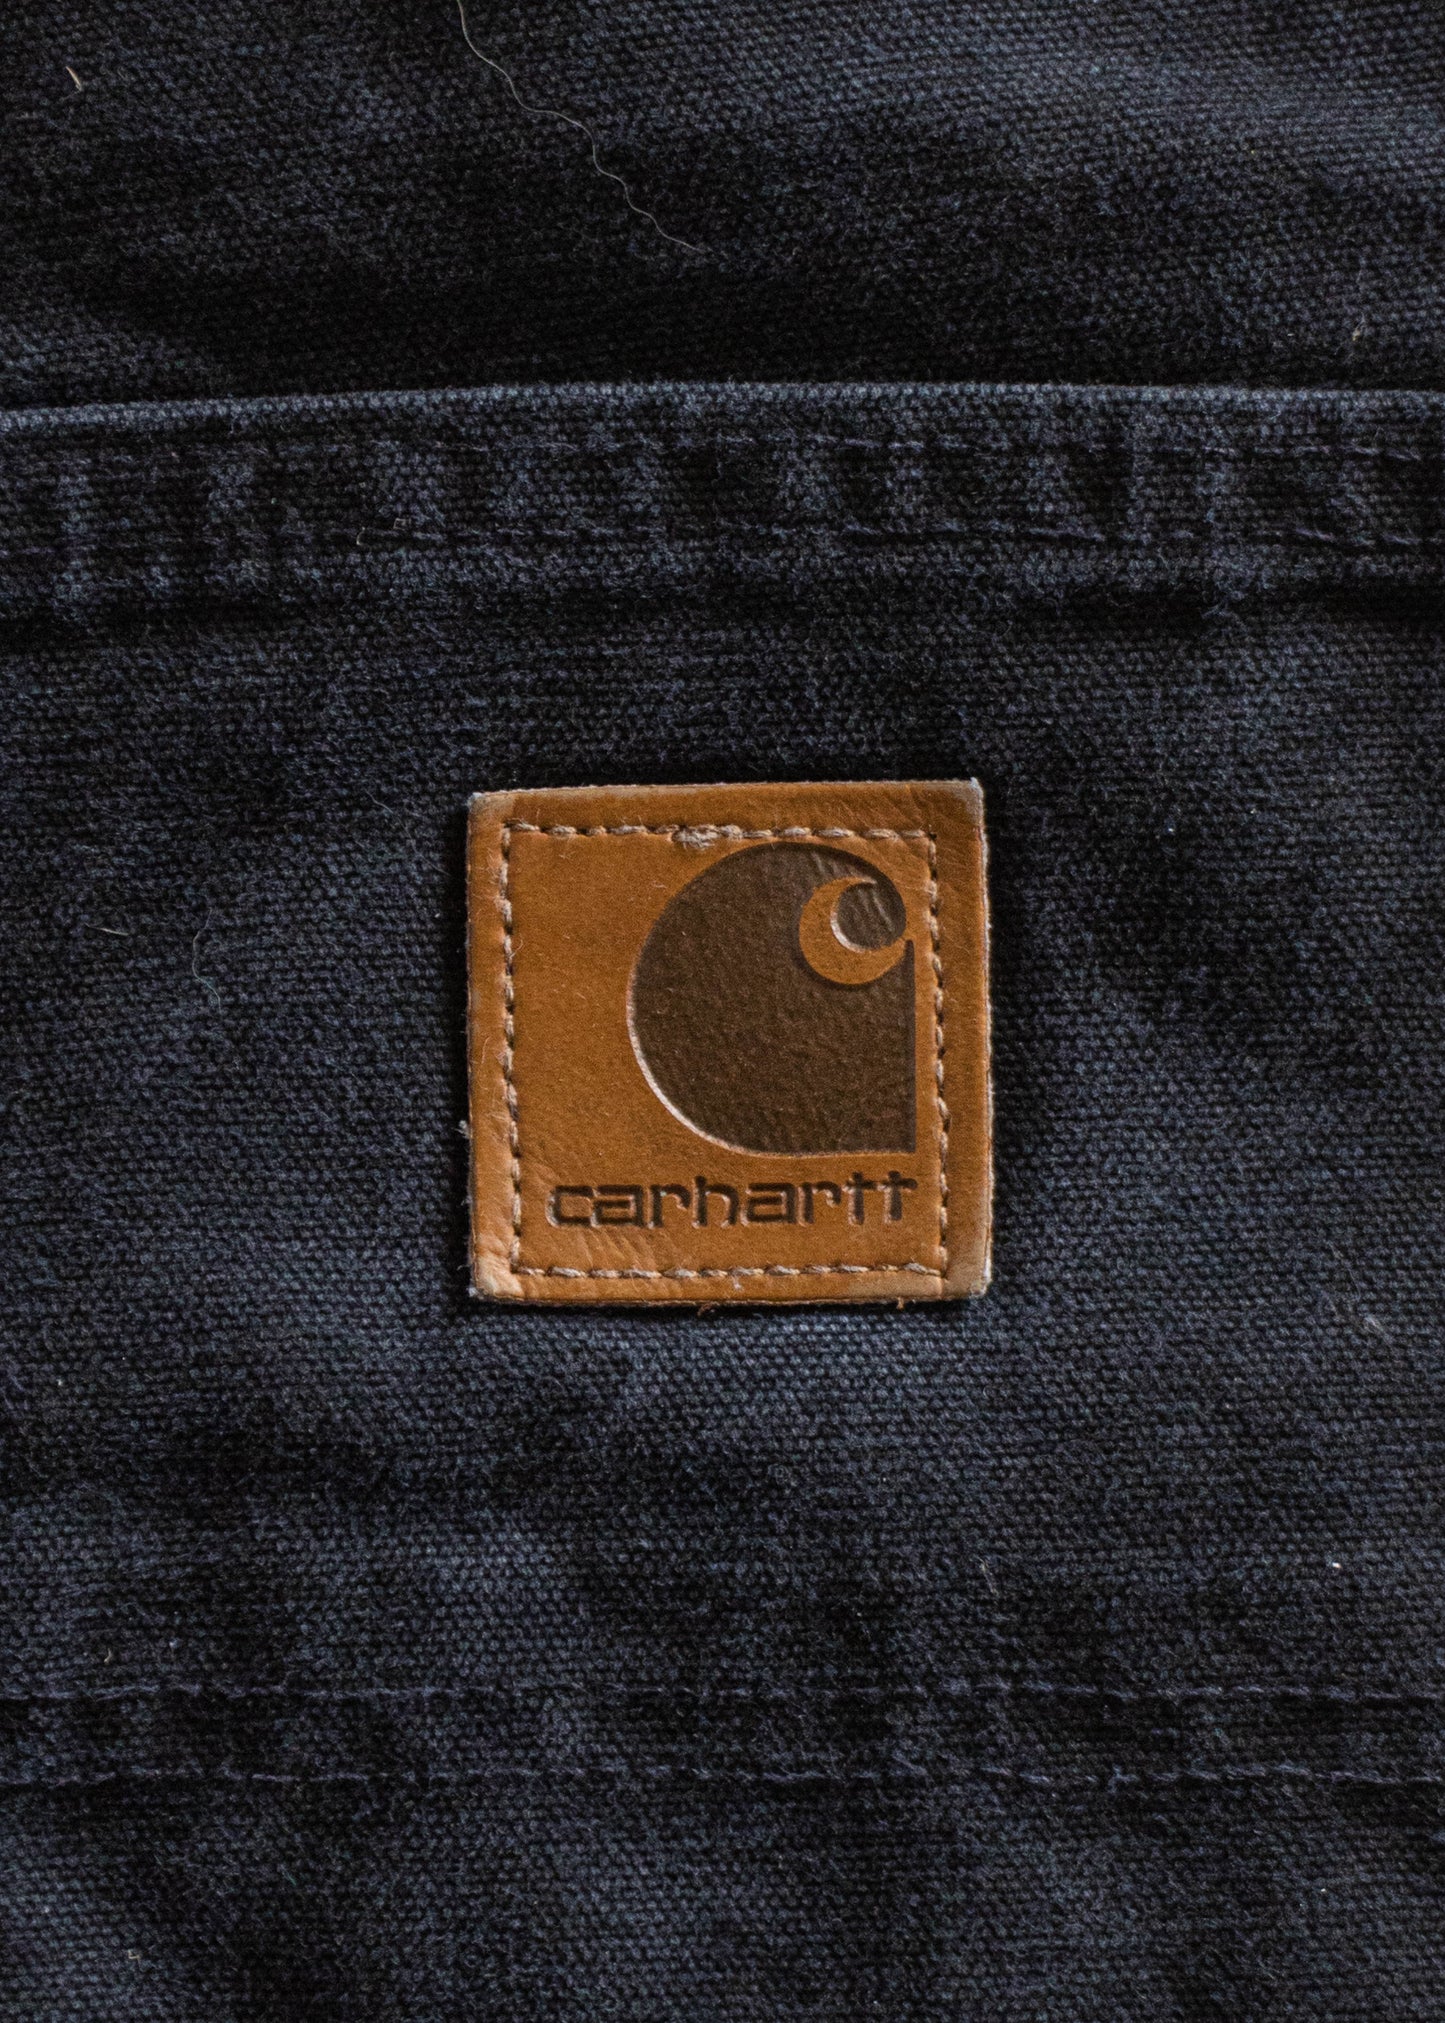 Carhartt Carpenter Pants Size Women's 36 Men's 38